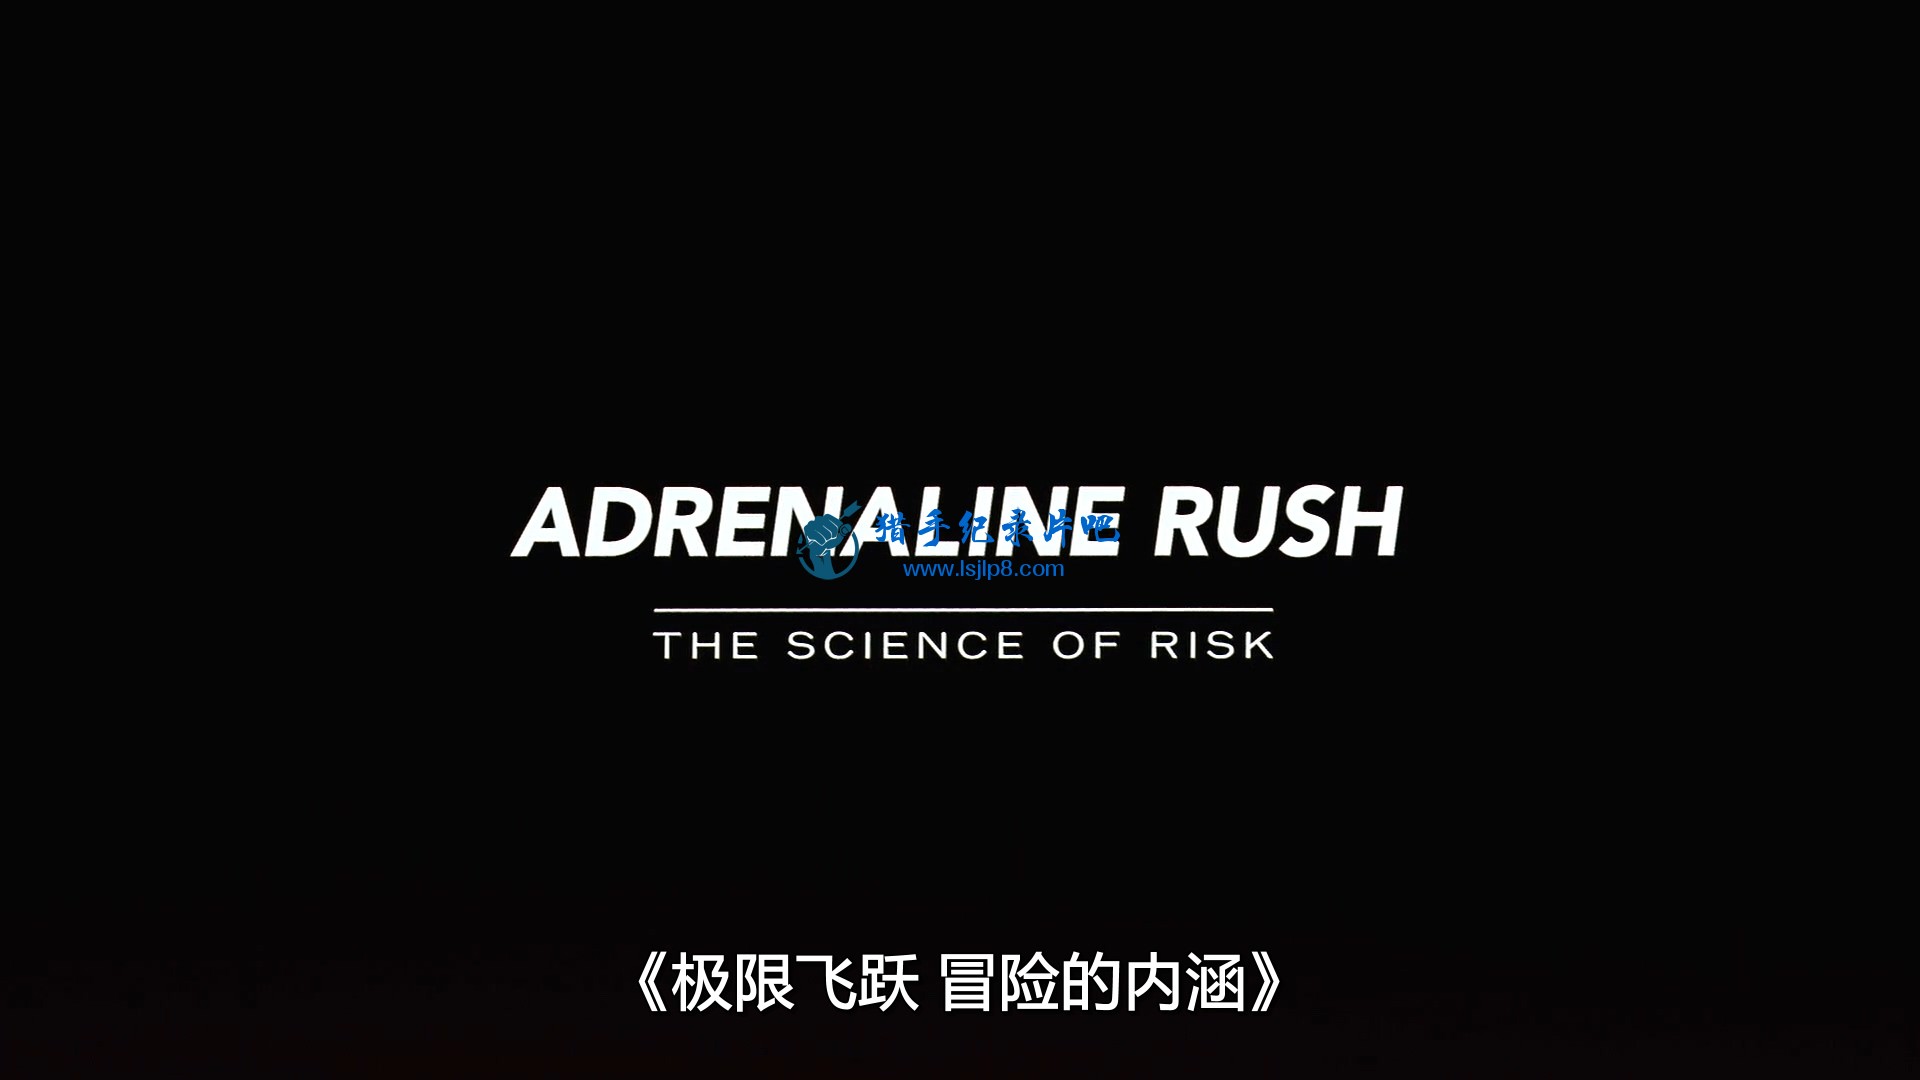 IMAX.Adrenaline.Rush.The.Science.of.Risk.2002.Blu-ray.1080P.x264.DTS-MySiLU.mkv_.jpg